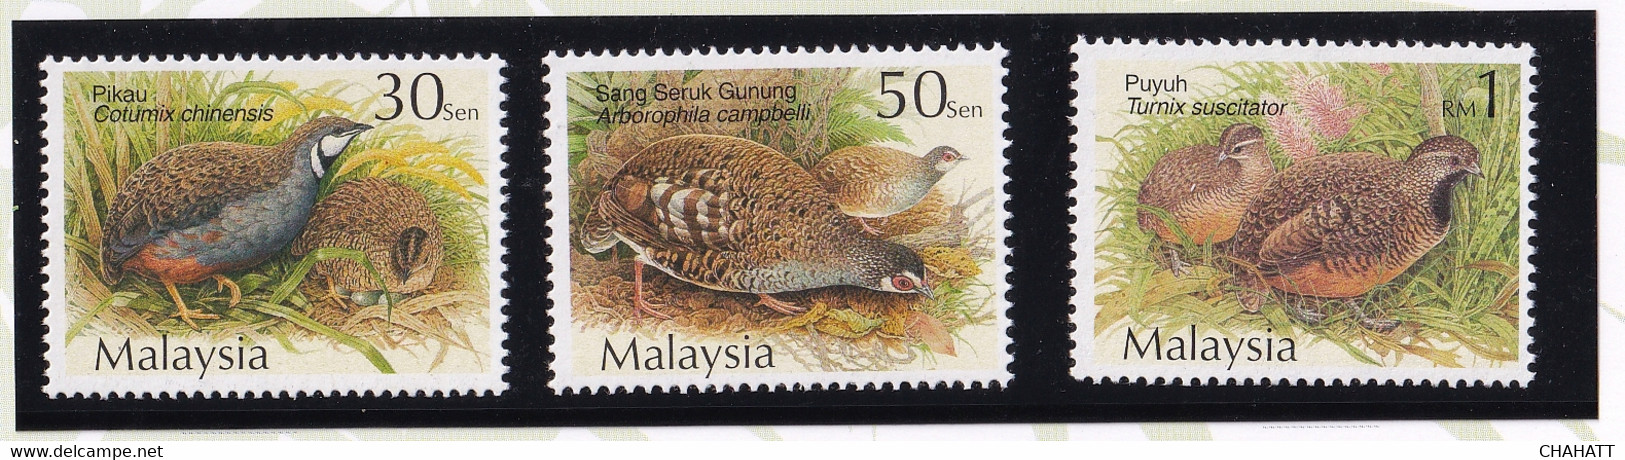 BIRDS-QUAILS & PARTRIDGES-PRESENTATION PACK-MALAYSIA-2001-SCARCE-FC2-104 - Pernice, Quaglie